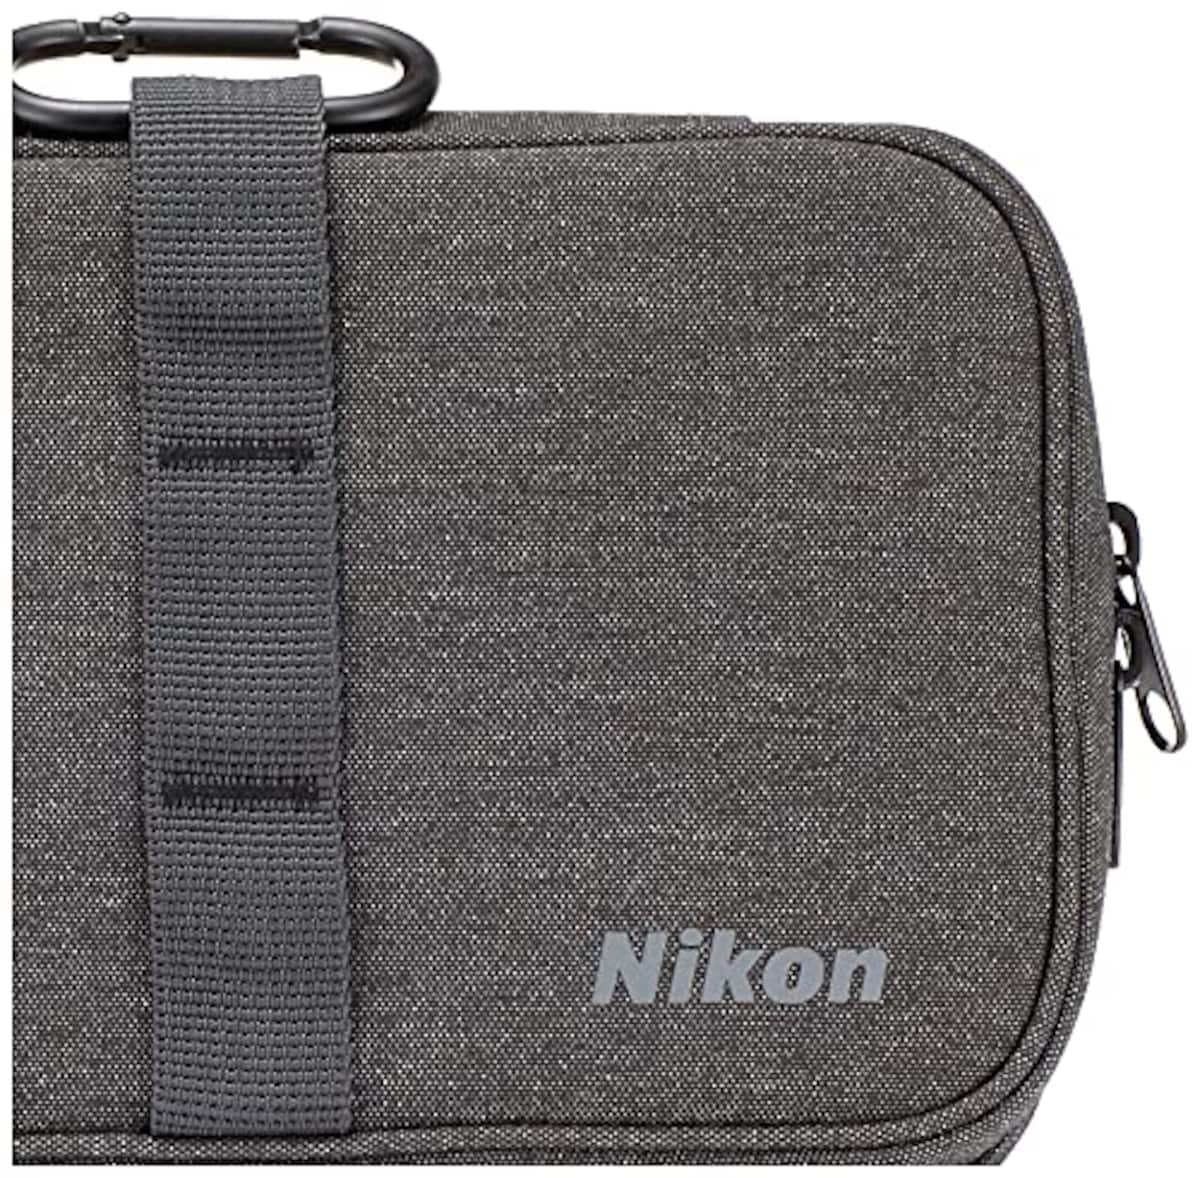  Nikon フィルターケース FTC-01 最大82mm径・8枚収納可能 撥水・防滴 FTC01画像5 